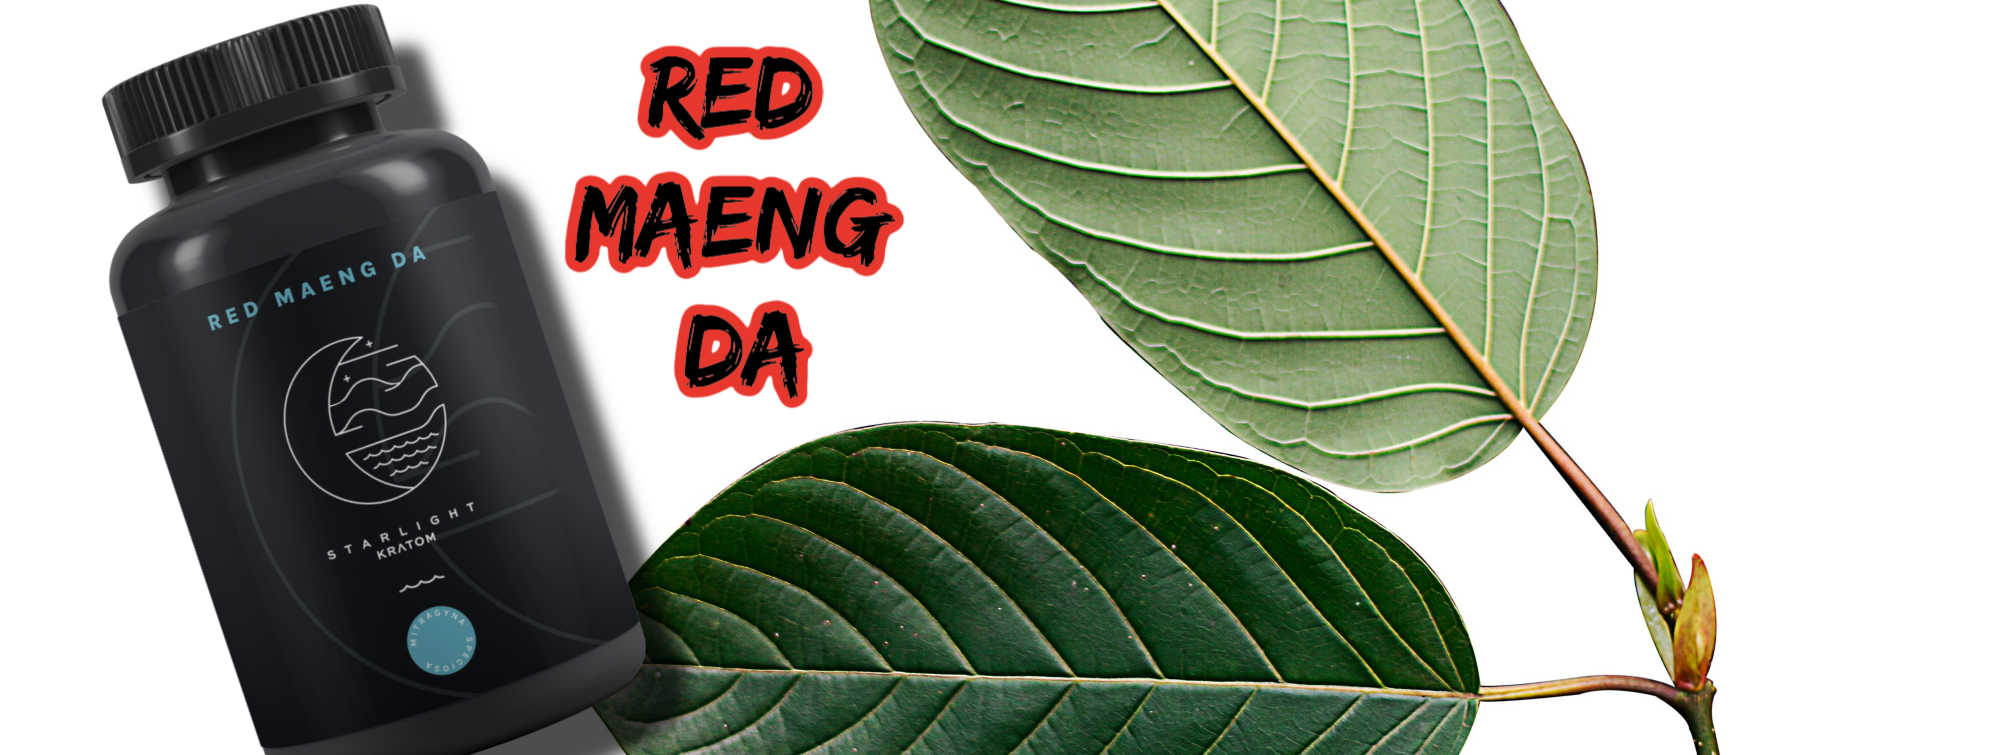 image of red maeng da